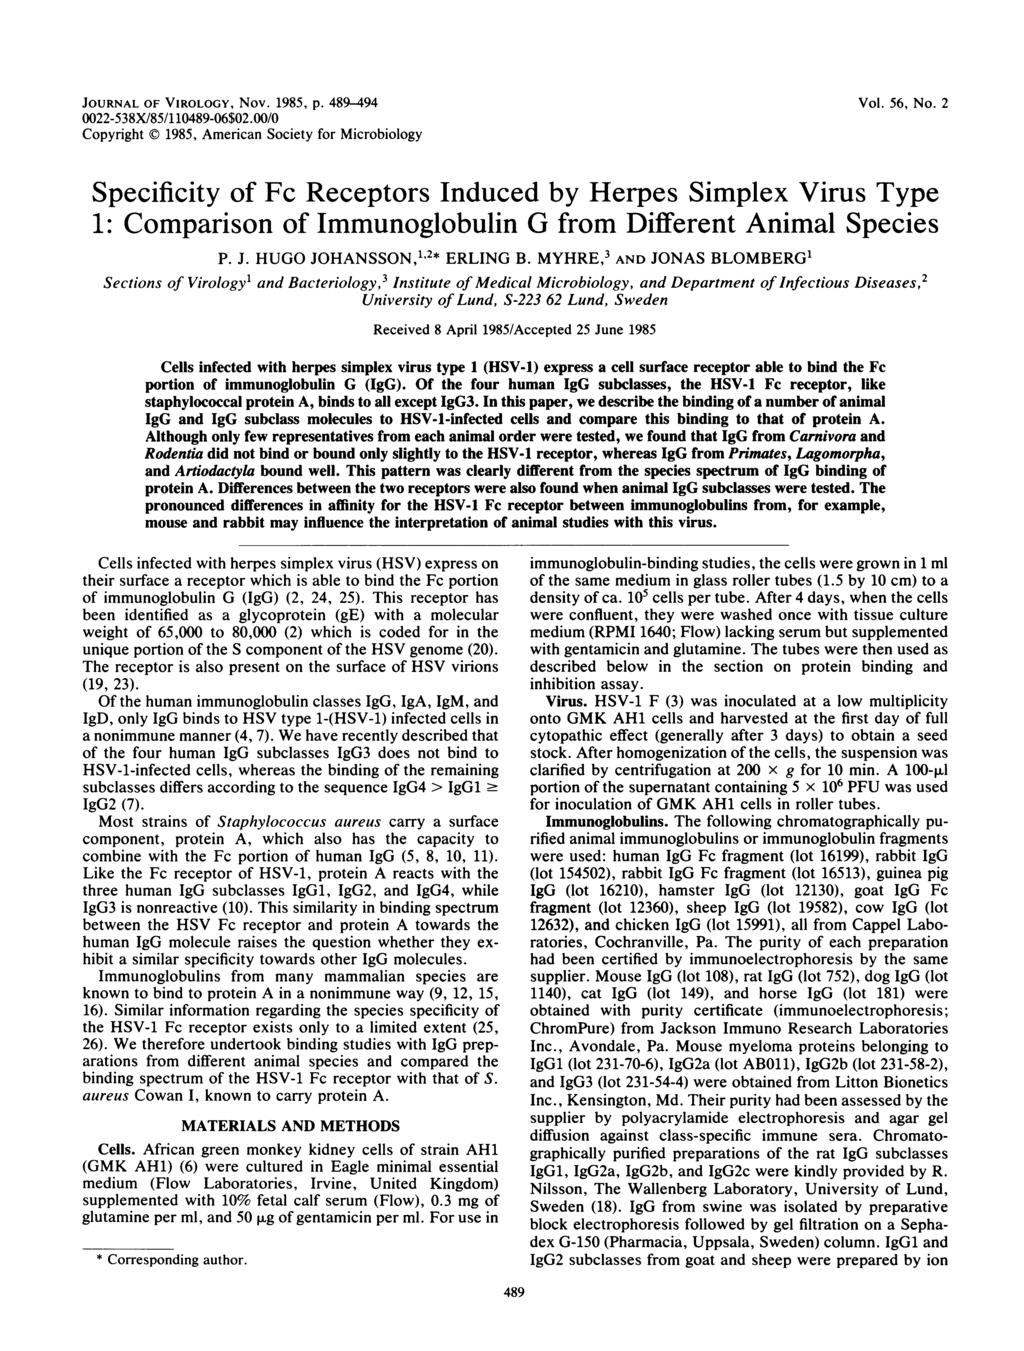 JOURNAL OF VIROLOGY, Nov. 1985, p. 489-494 0022-538X/85/110489-06$02.00/0 Copyright 1985, American Society for Microbiology Vol. 56, No.